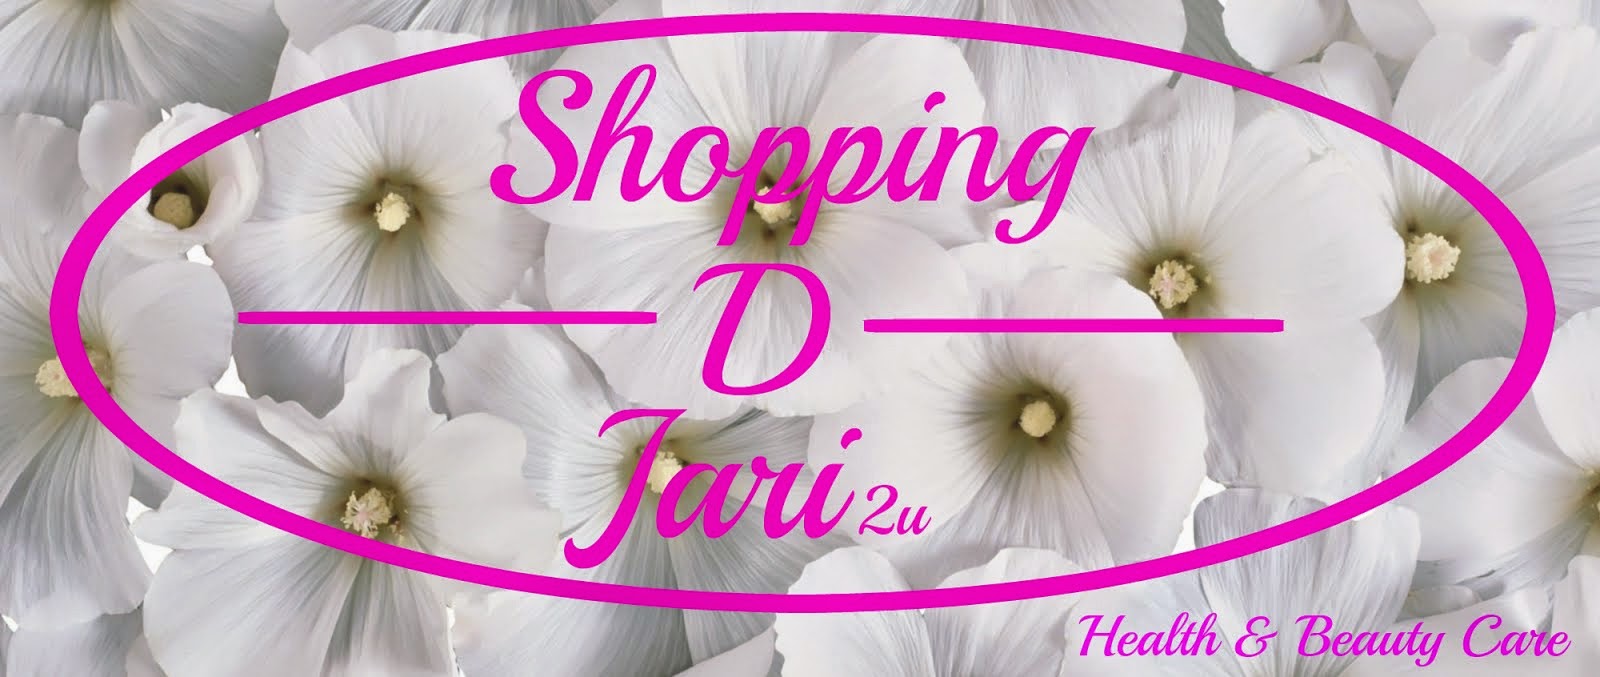 ShoppingDjari2u : Beauty&Healthcare